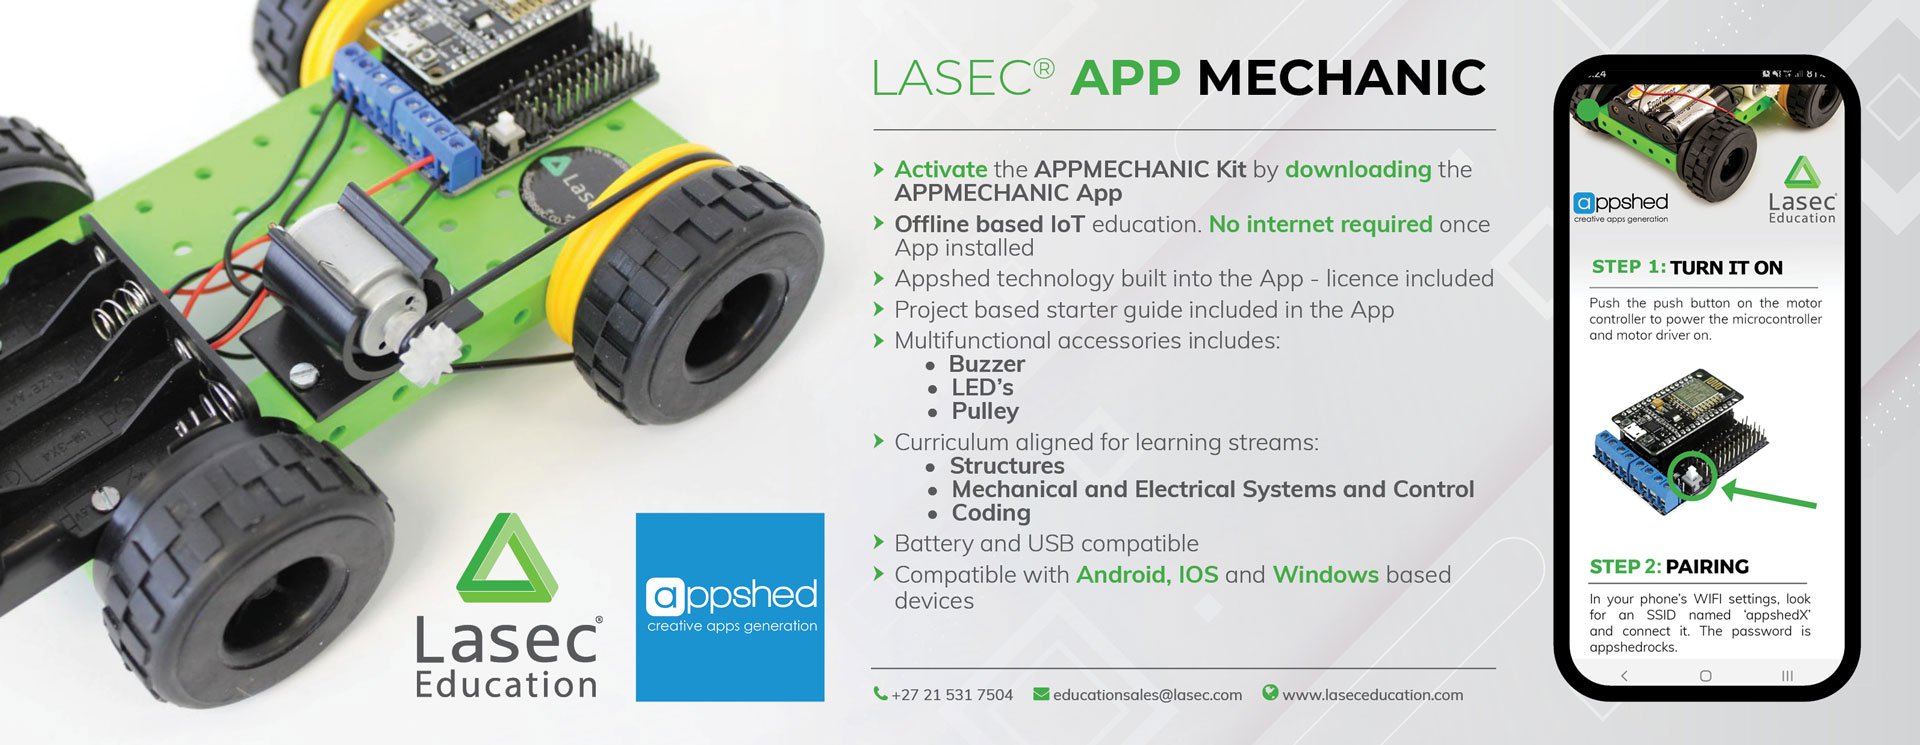 Lasec-App-Mechanic-25-02-2021